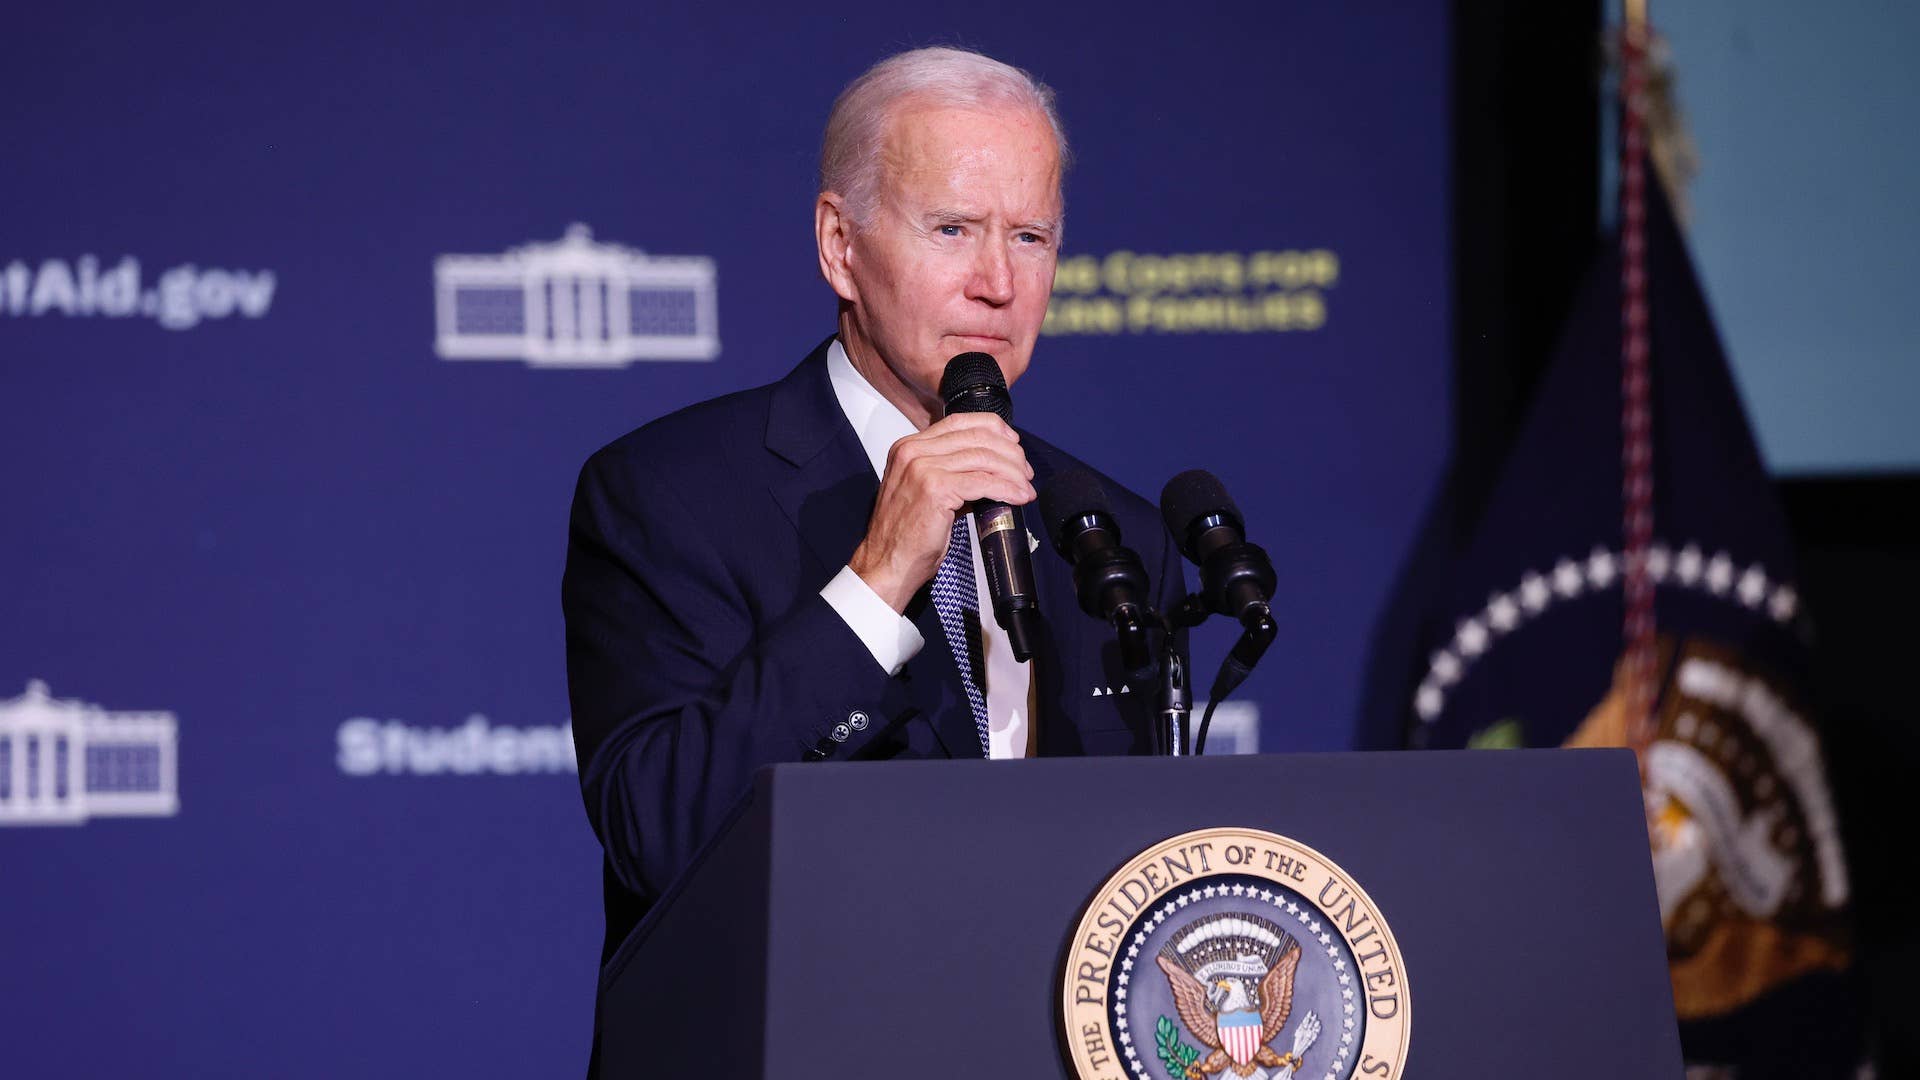 U.S. President Joe Biden gives remarks on student debt relief at Delaware State University